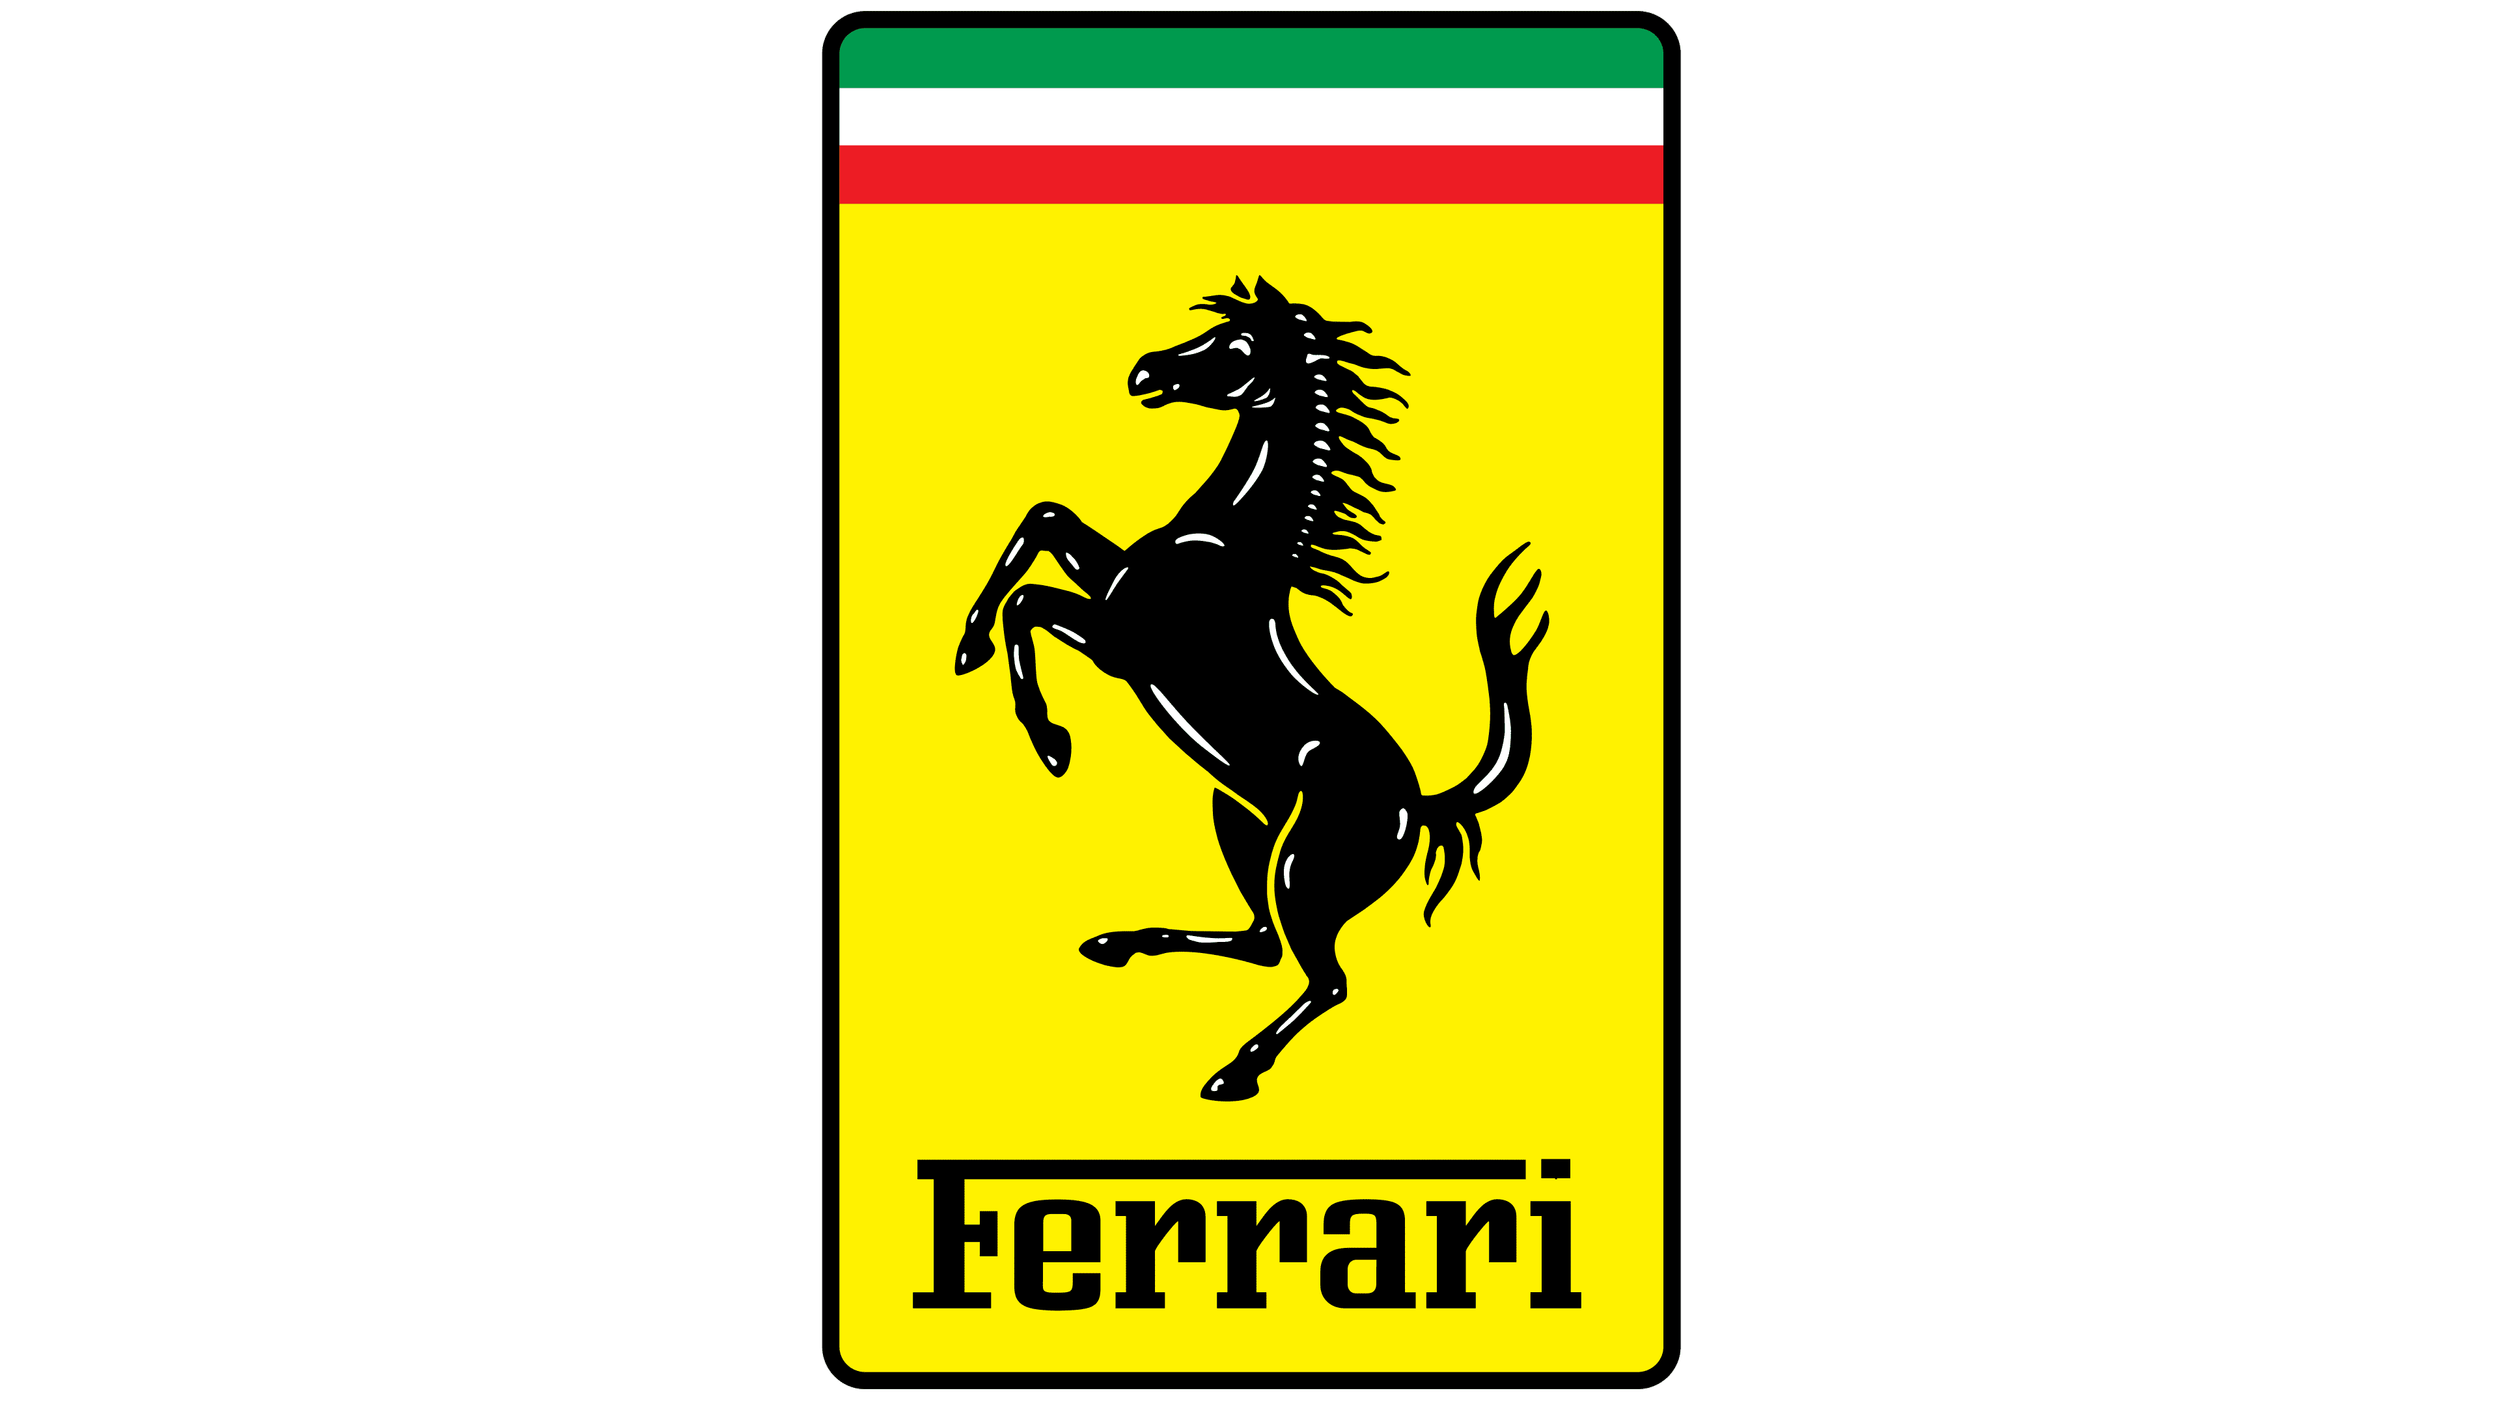 Ferrari-Logo.png